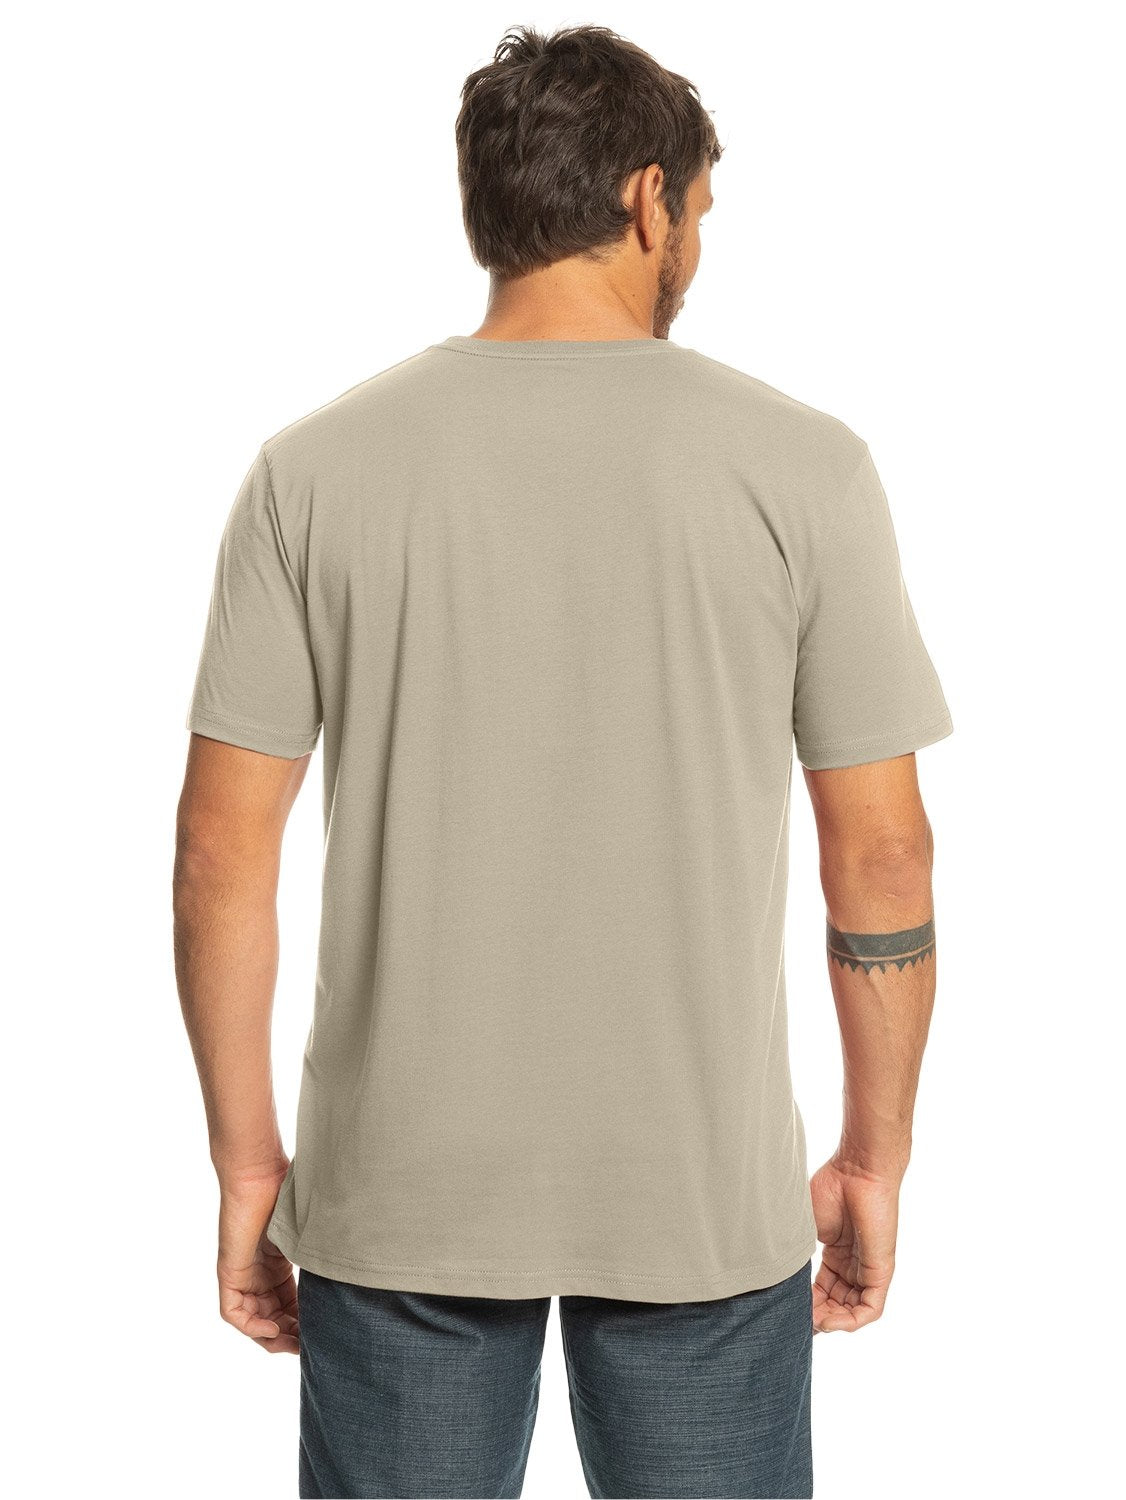 Quiksilver Men's SA Seal T-Shirt